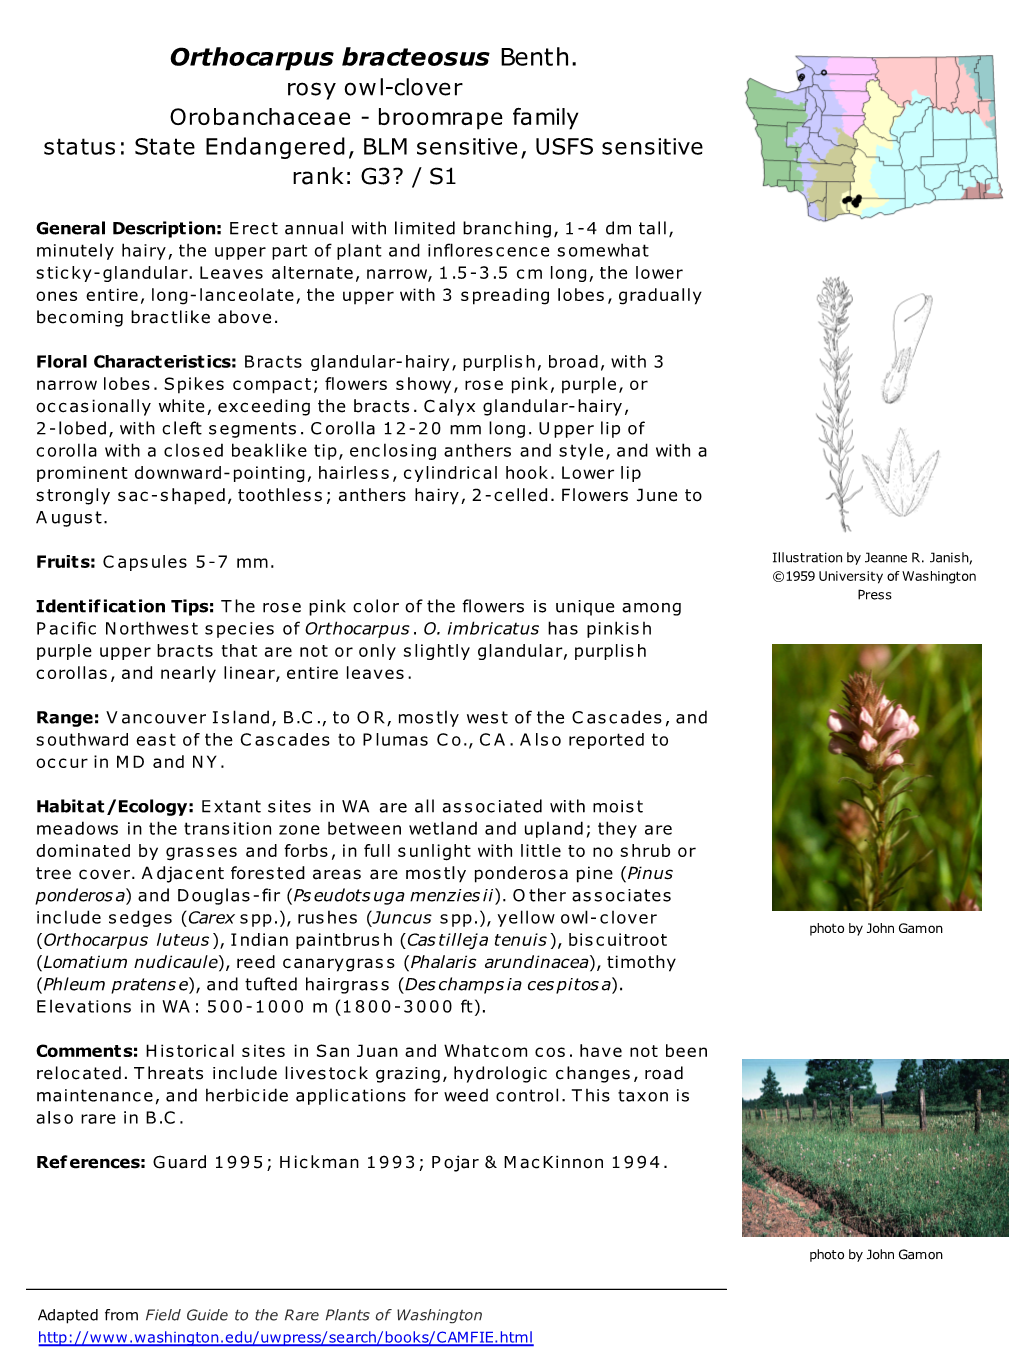 Orthocarpus Bracteosus Benth. Rosy Owl-Clover Orobanchaceae - Broomrape Family Status: State Endangered, BLM Sensitive, USFS Sensitive Rank: G3? / S1